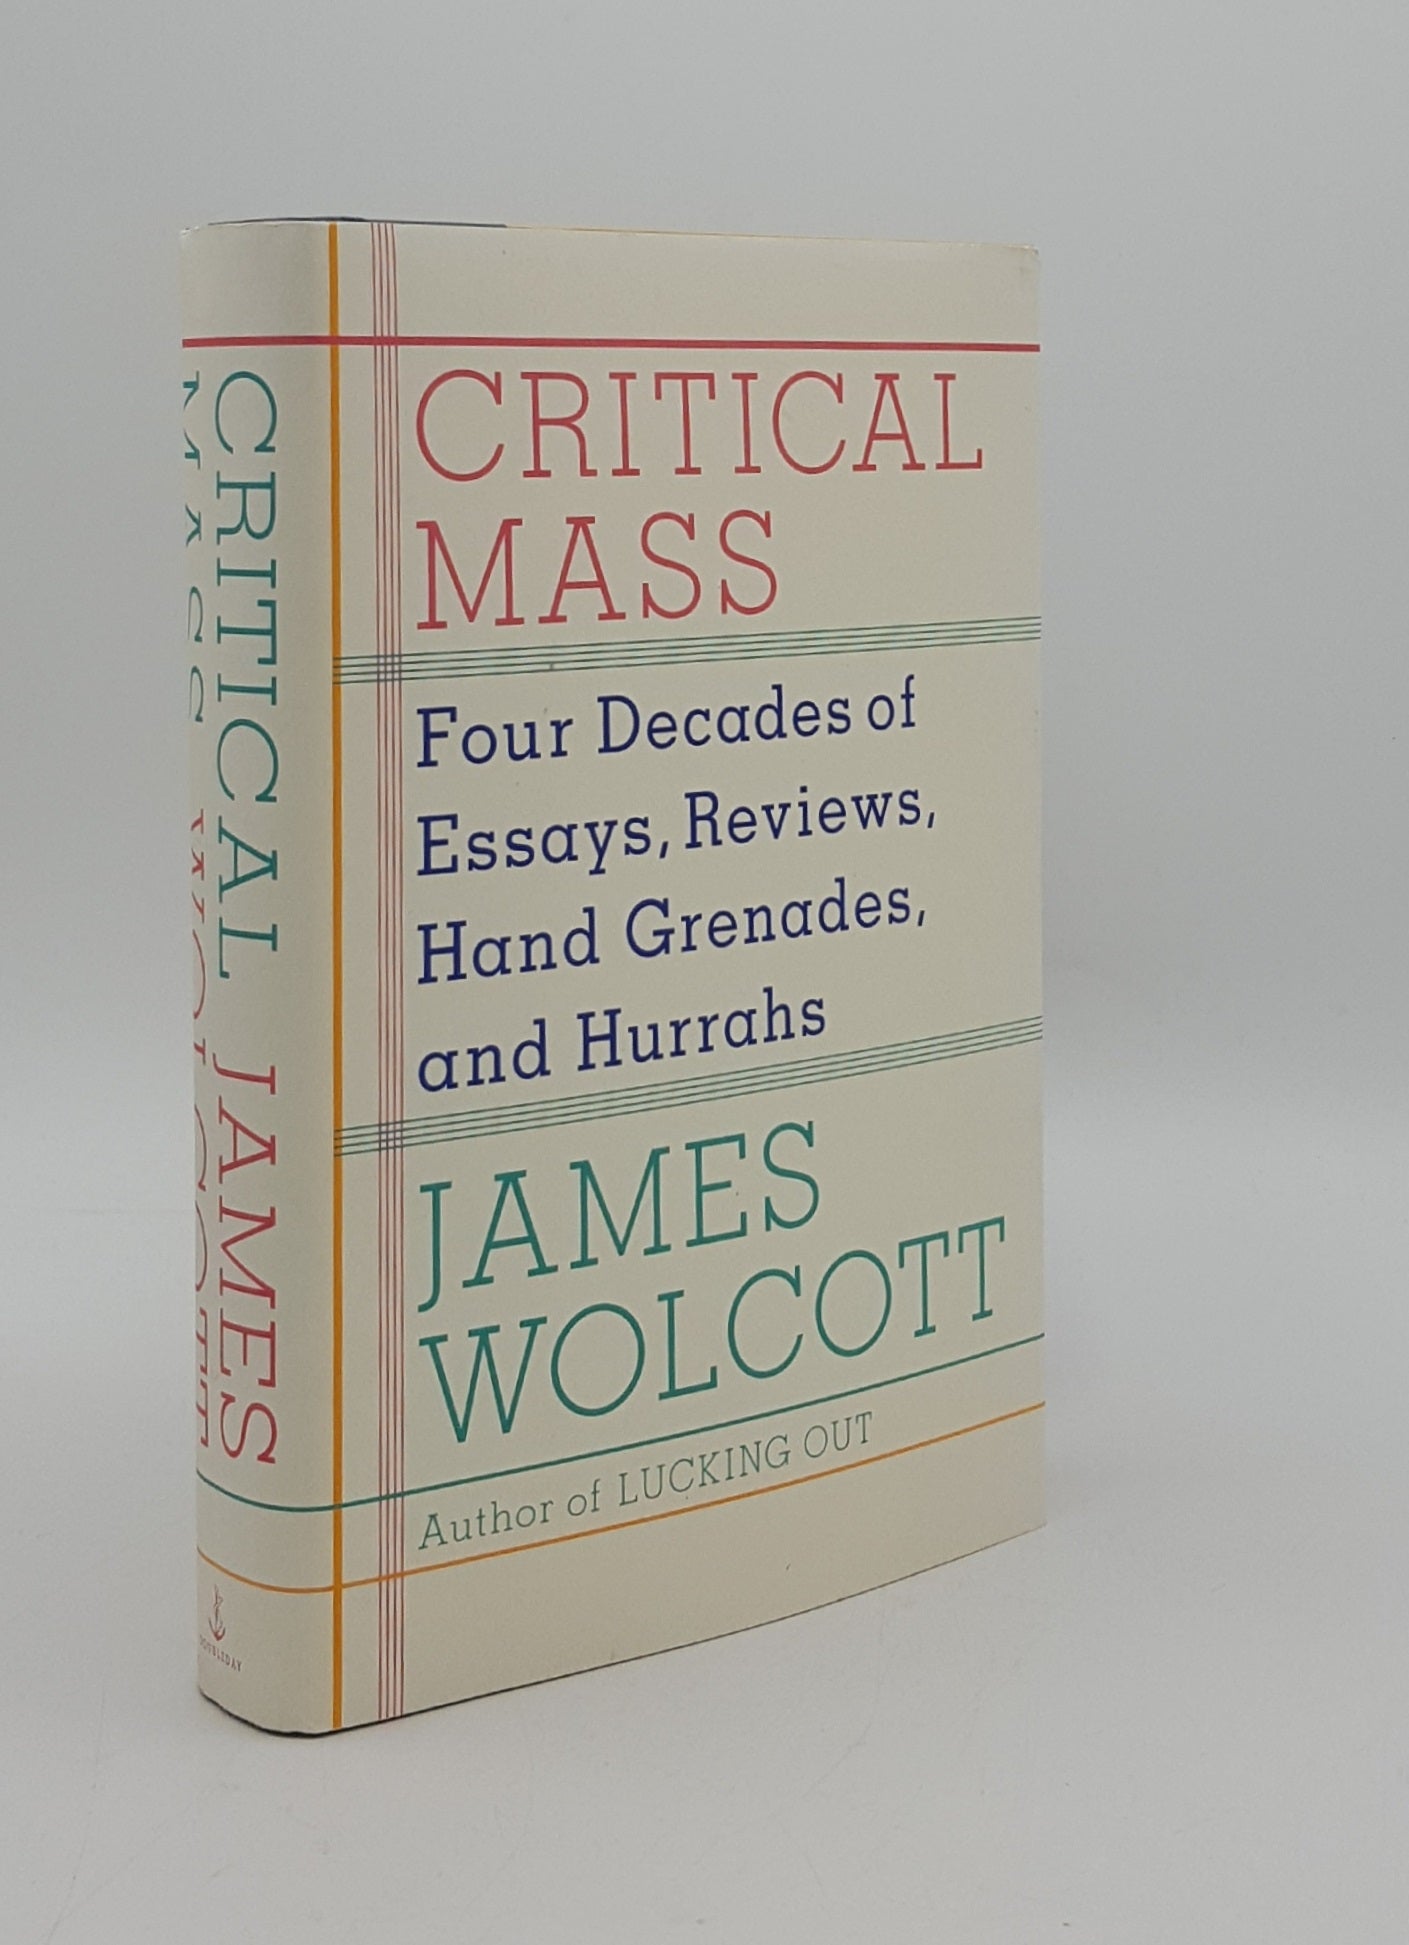 WOLCOTT James - Critical Mass Four Decades of Essays Reviews Hand Grenades and Hurrahs